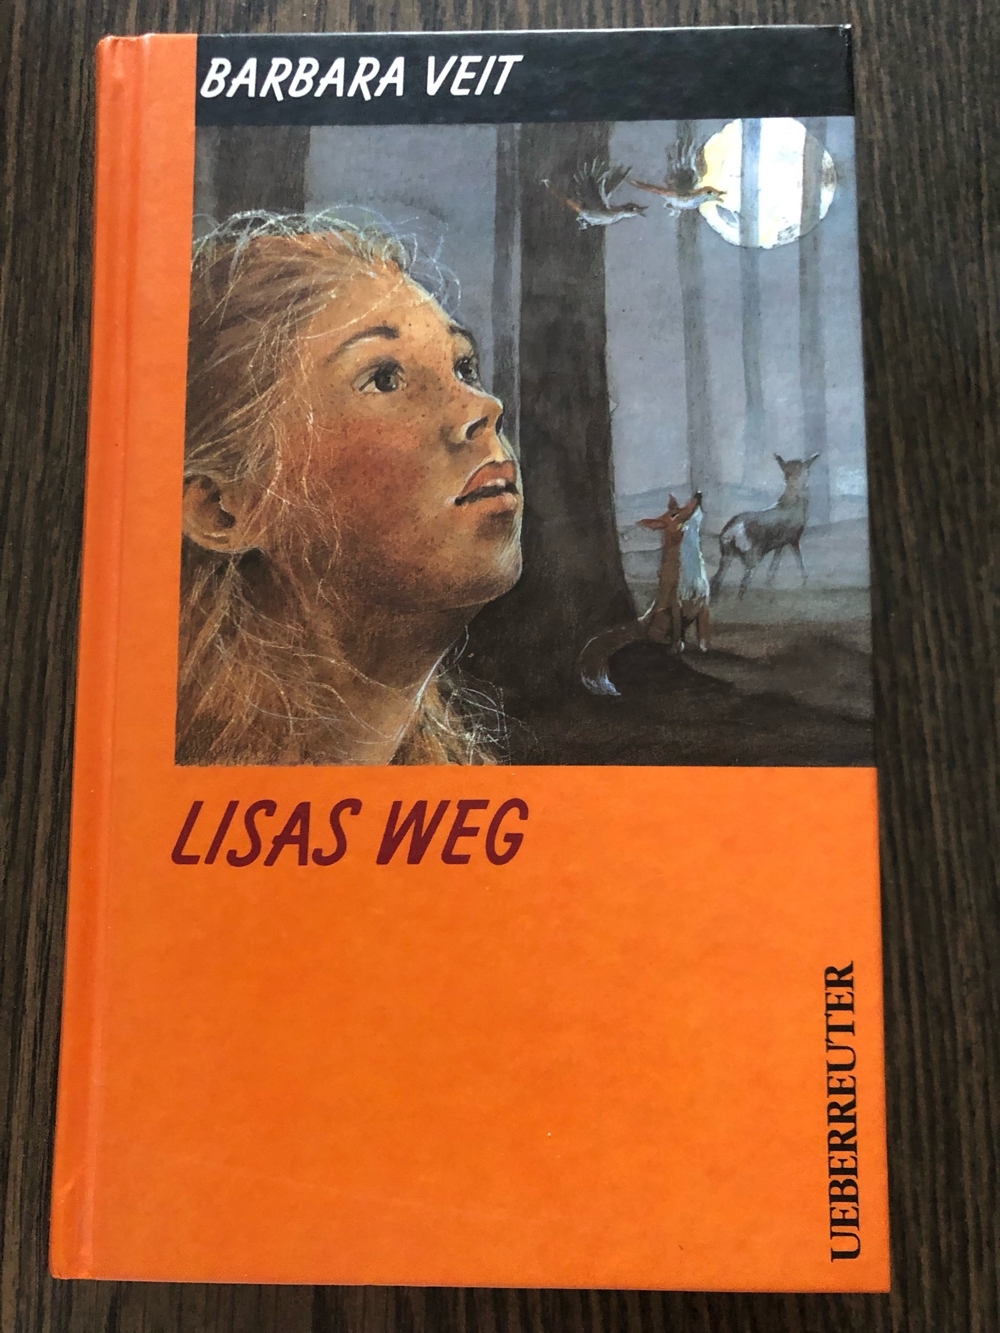 Lisas Weg, Barbara Veit